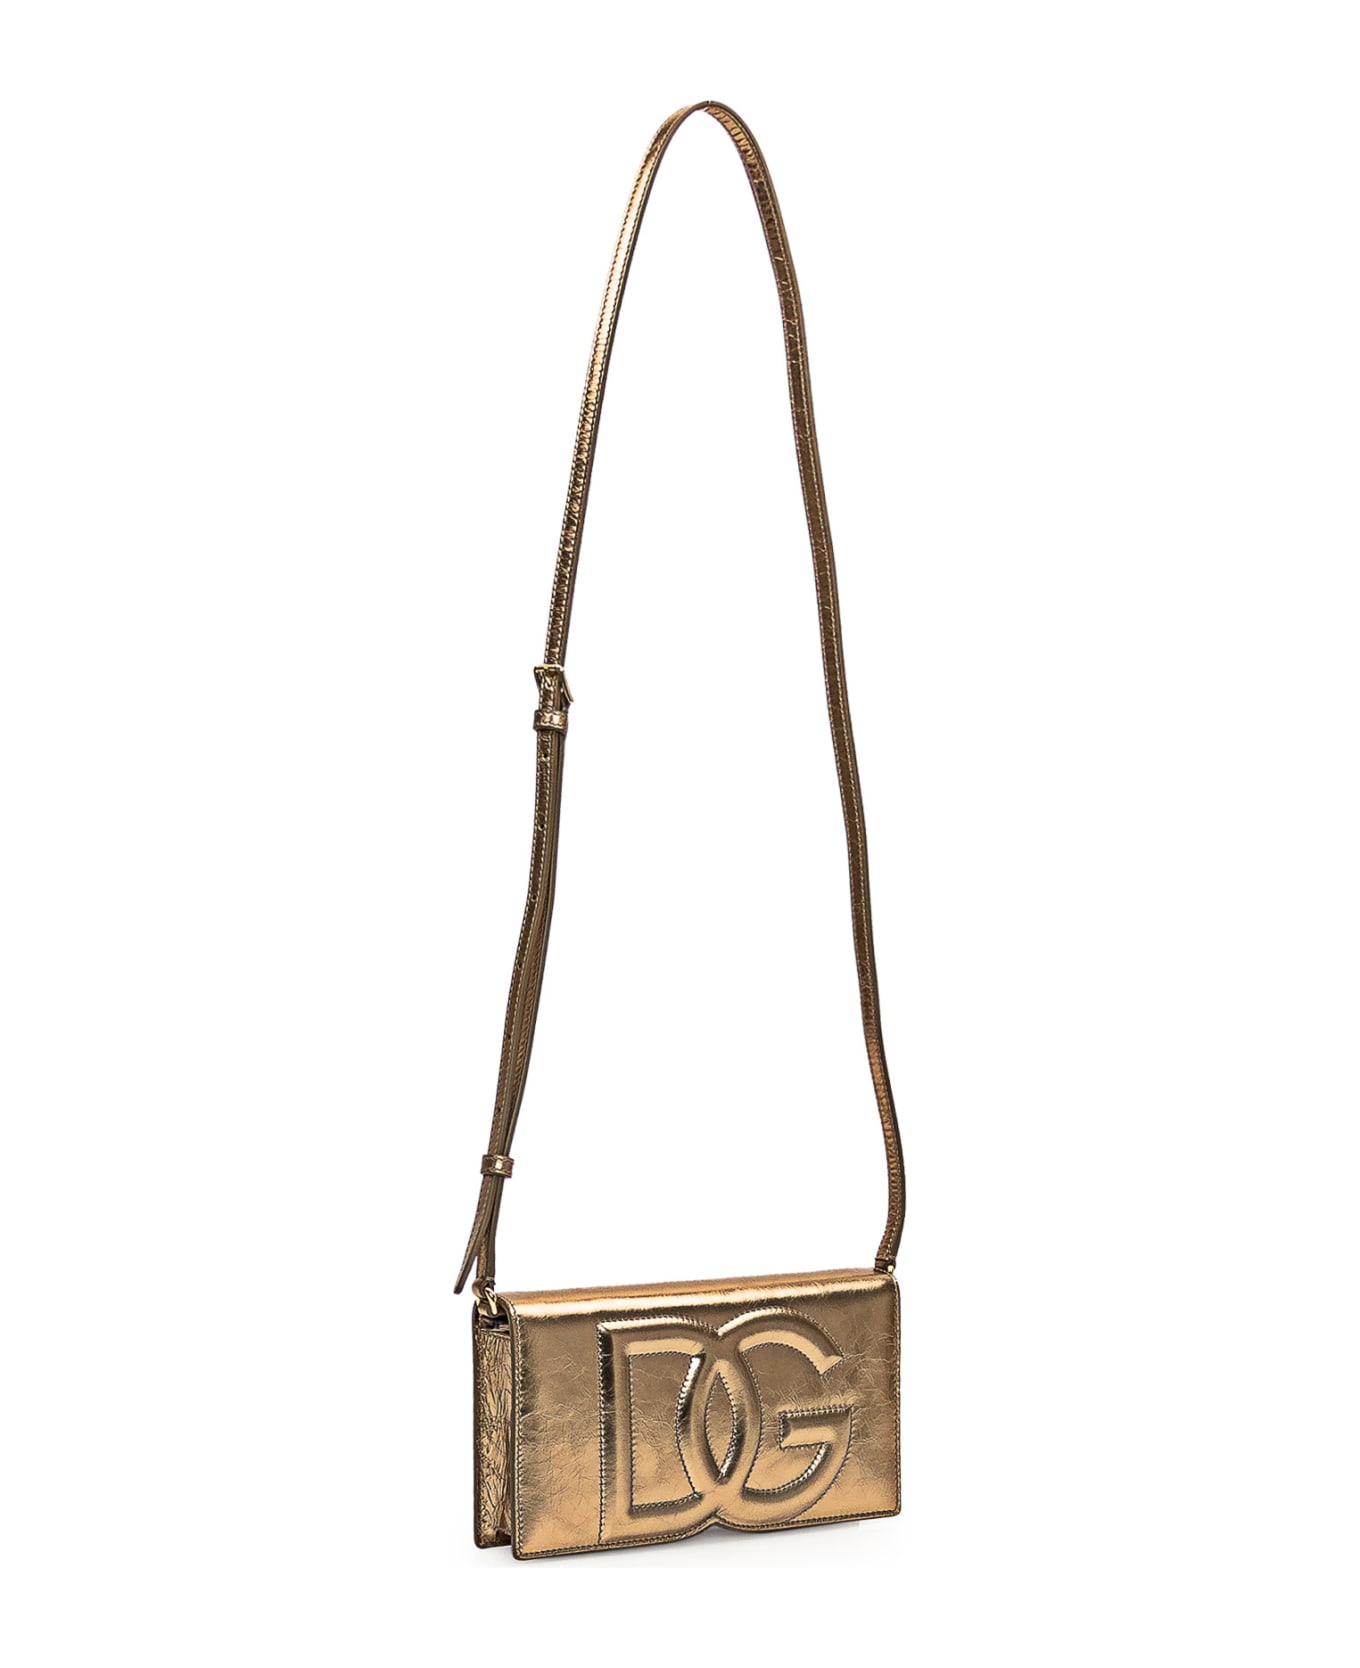 Dolce & Gabbana Shoulder Bag - Oro クラッチバッグ